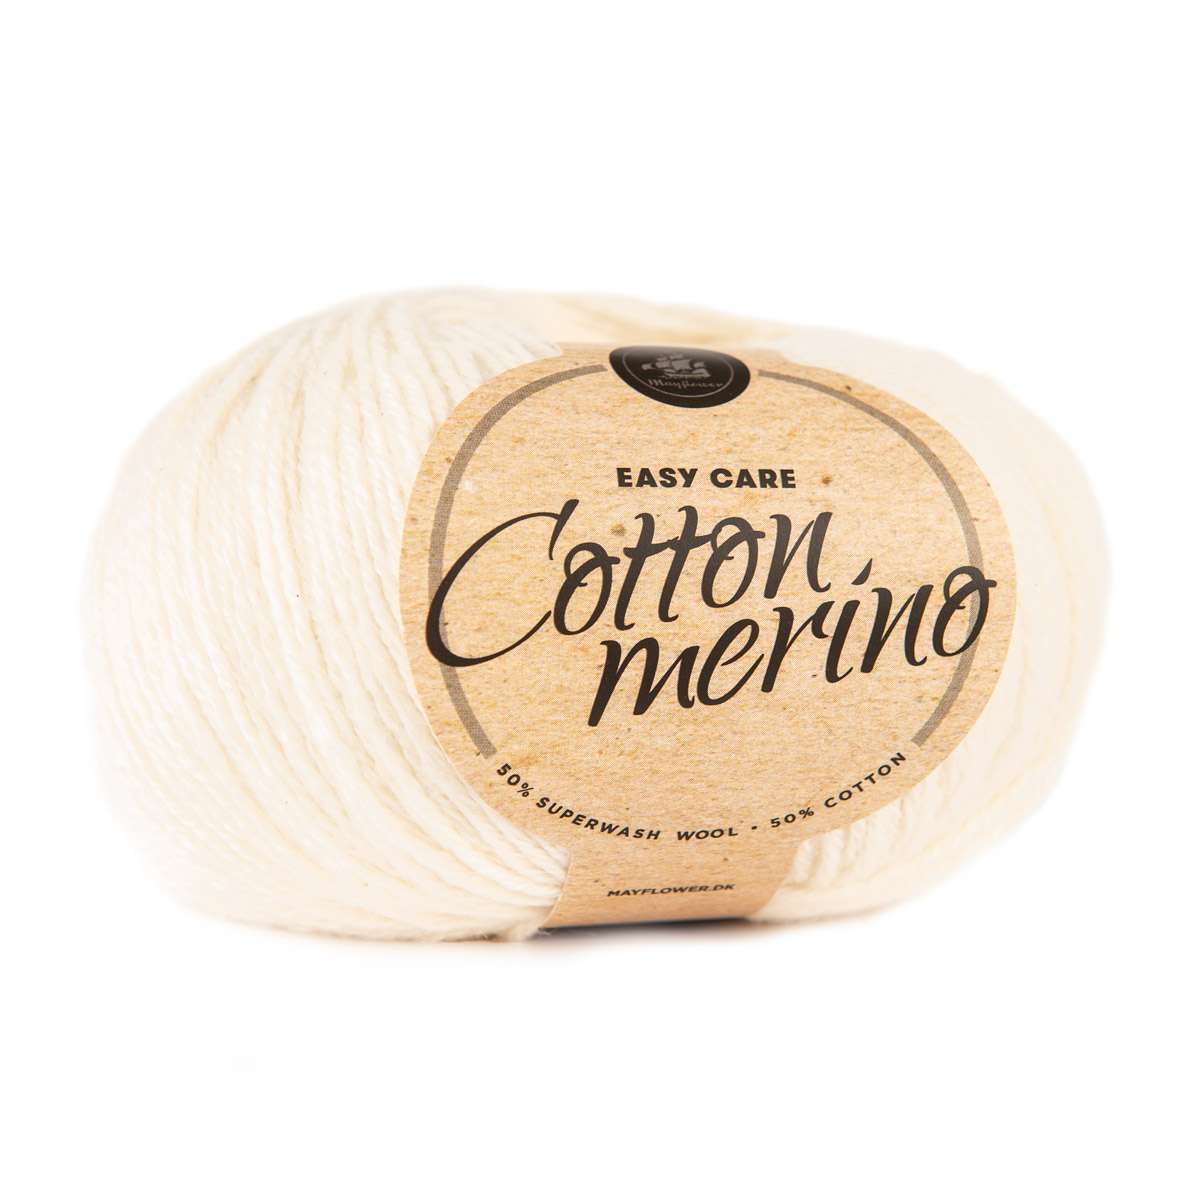 Cotton Merino - 40% while stocks last